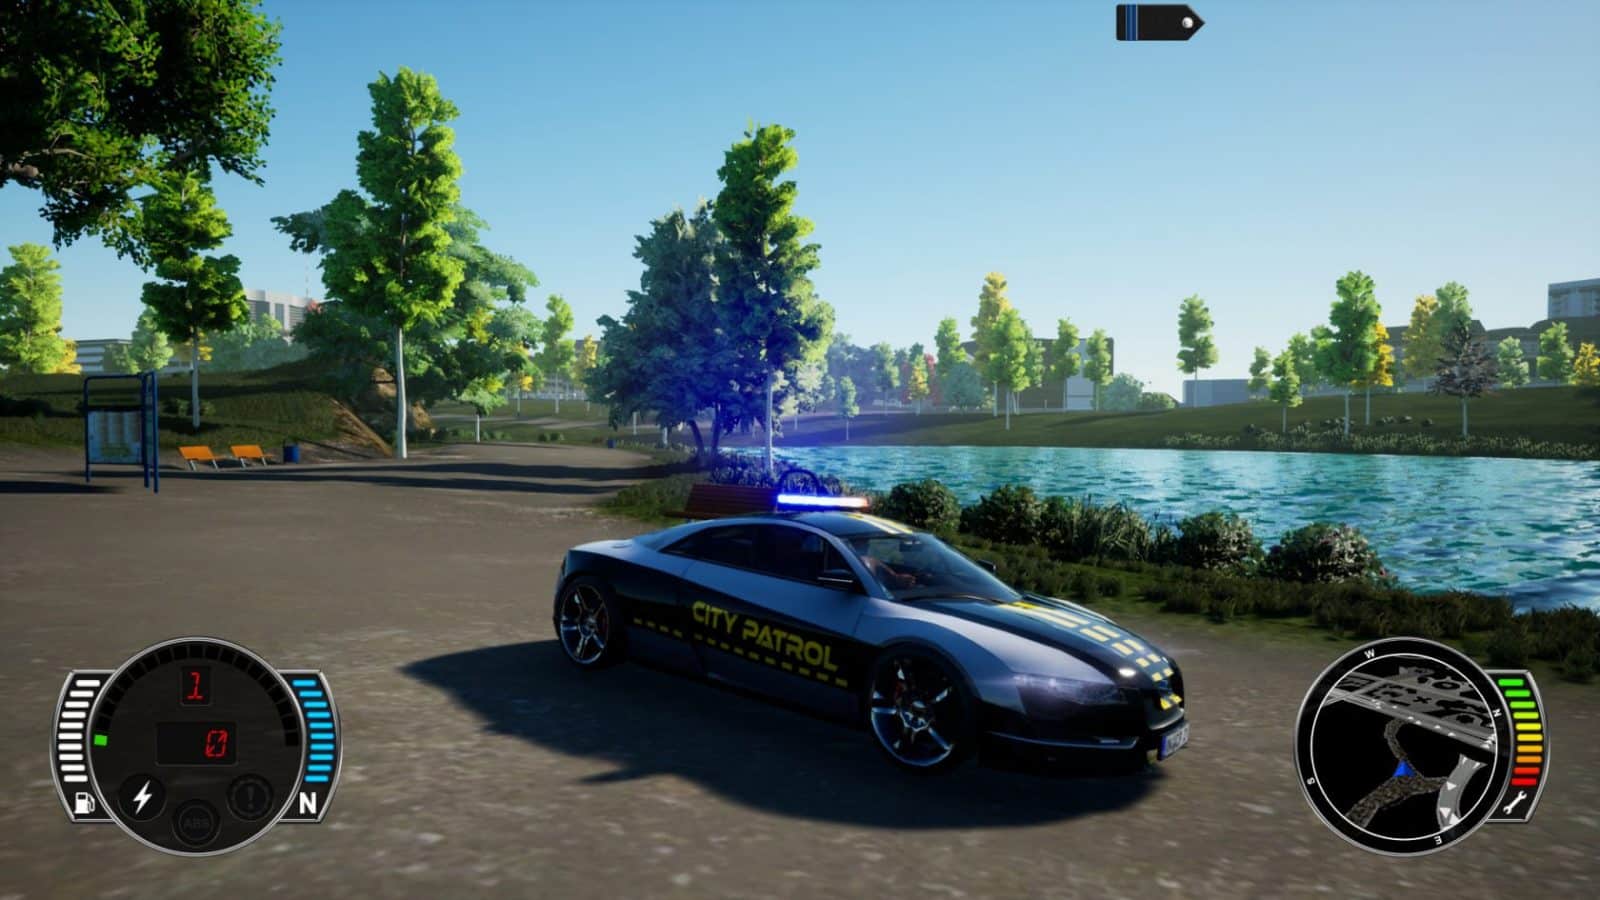 City Patrol: Police